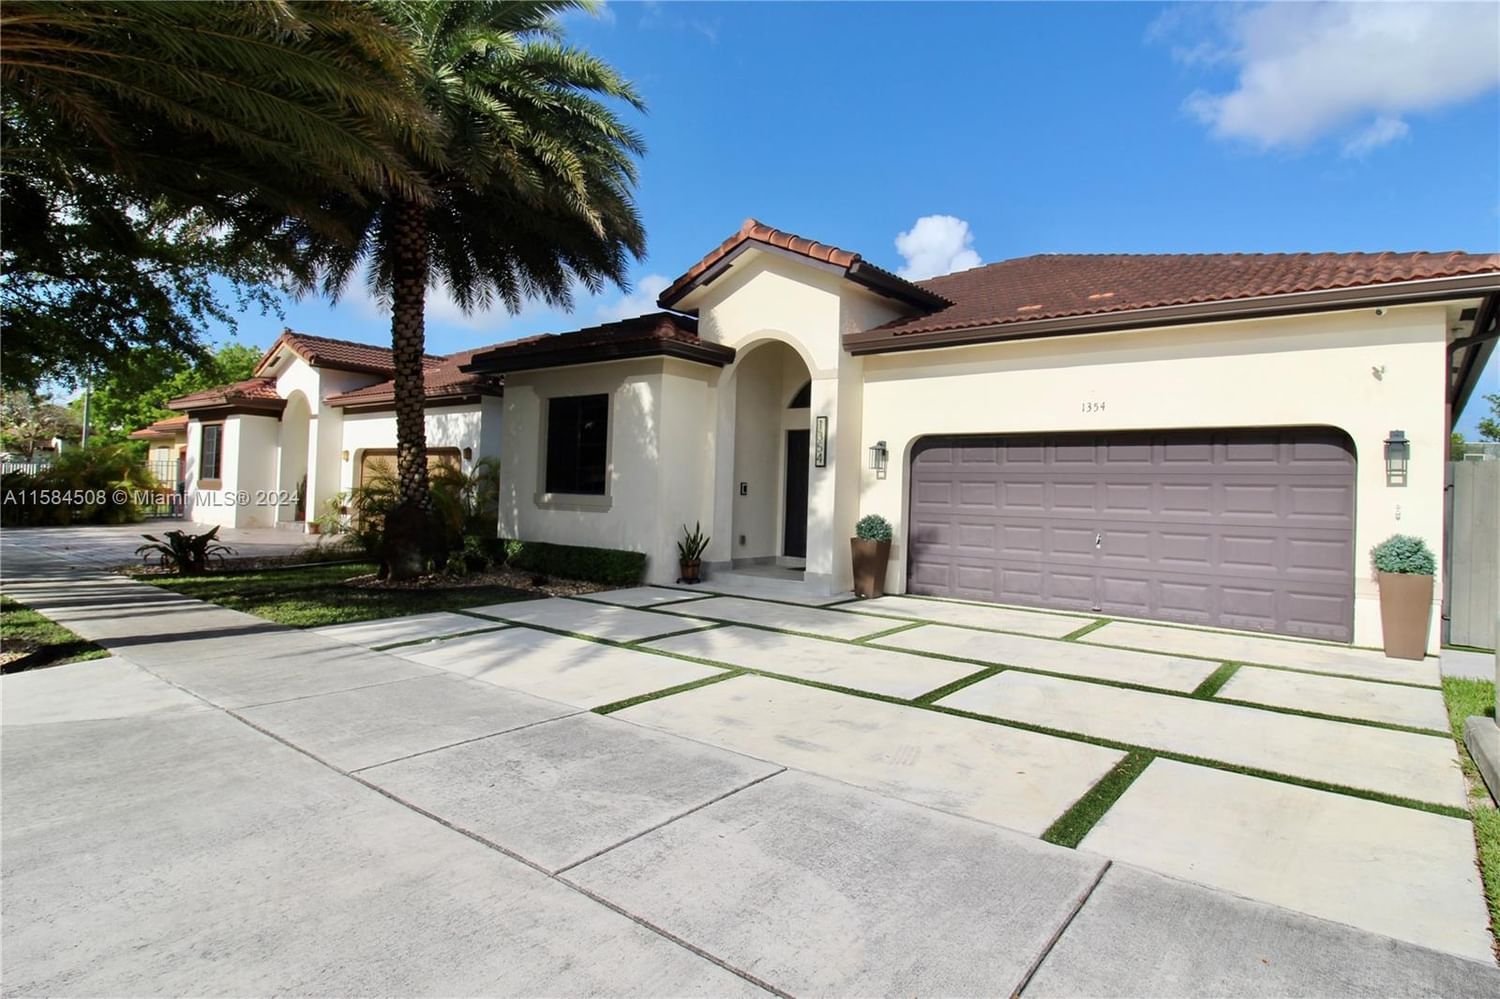 Real estate property located at 1354 146th Ct, Miami-Dade County, MELODY HOMES SUBDIVISION, Miami, FL